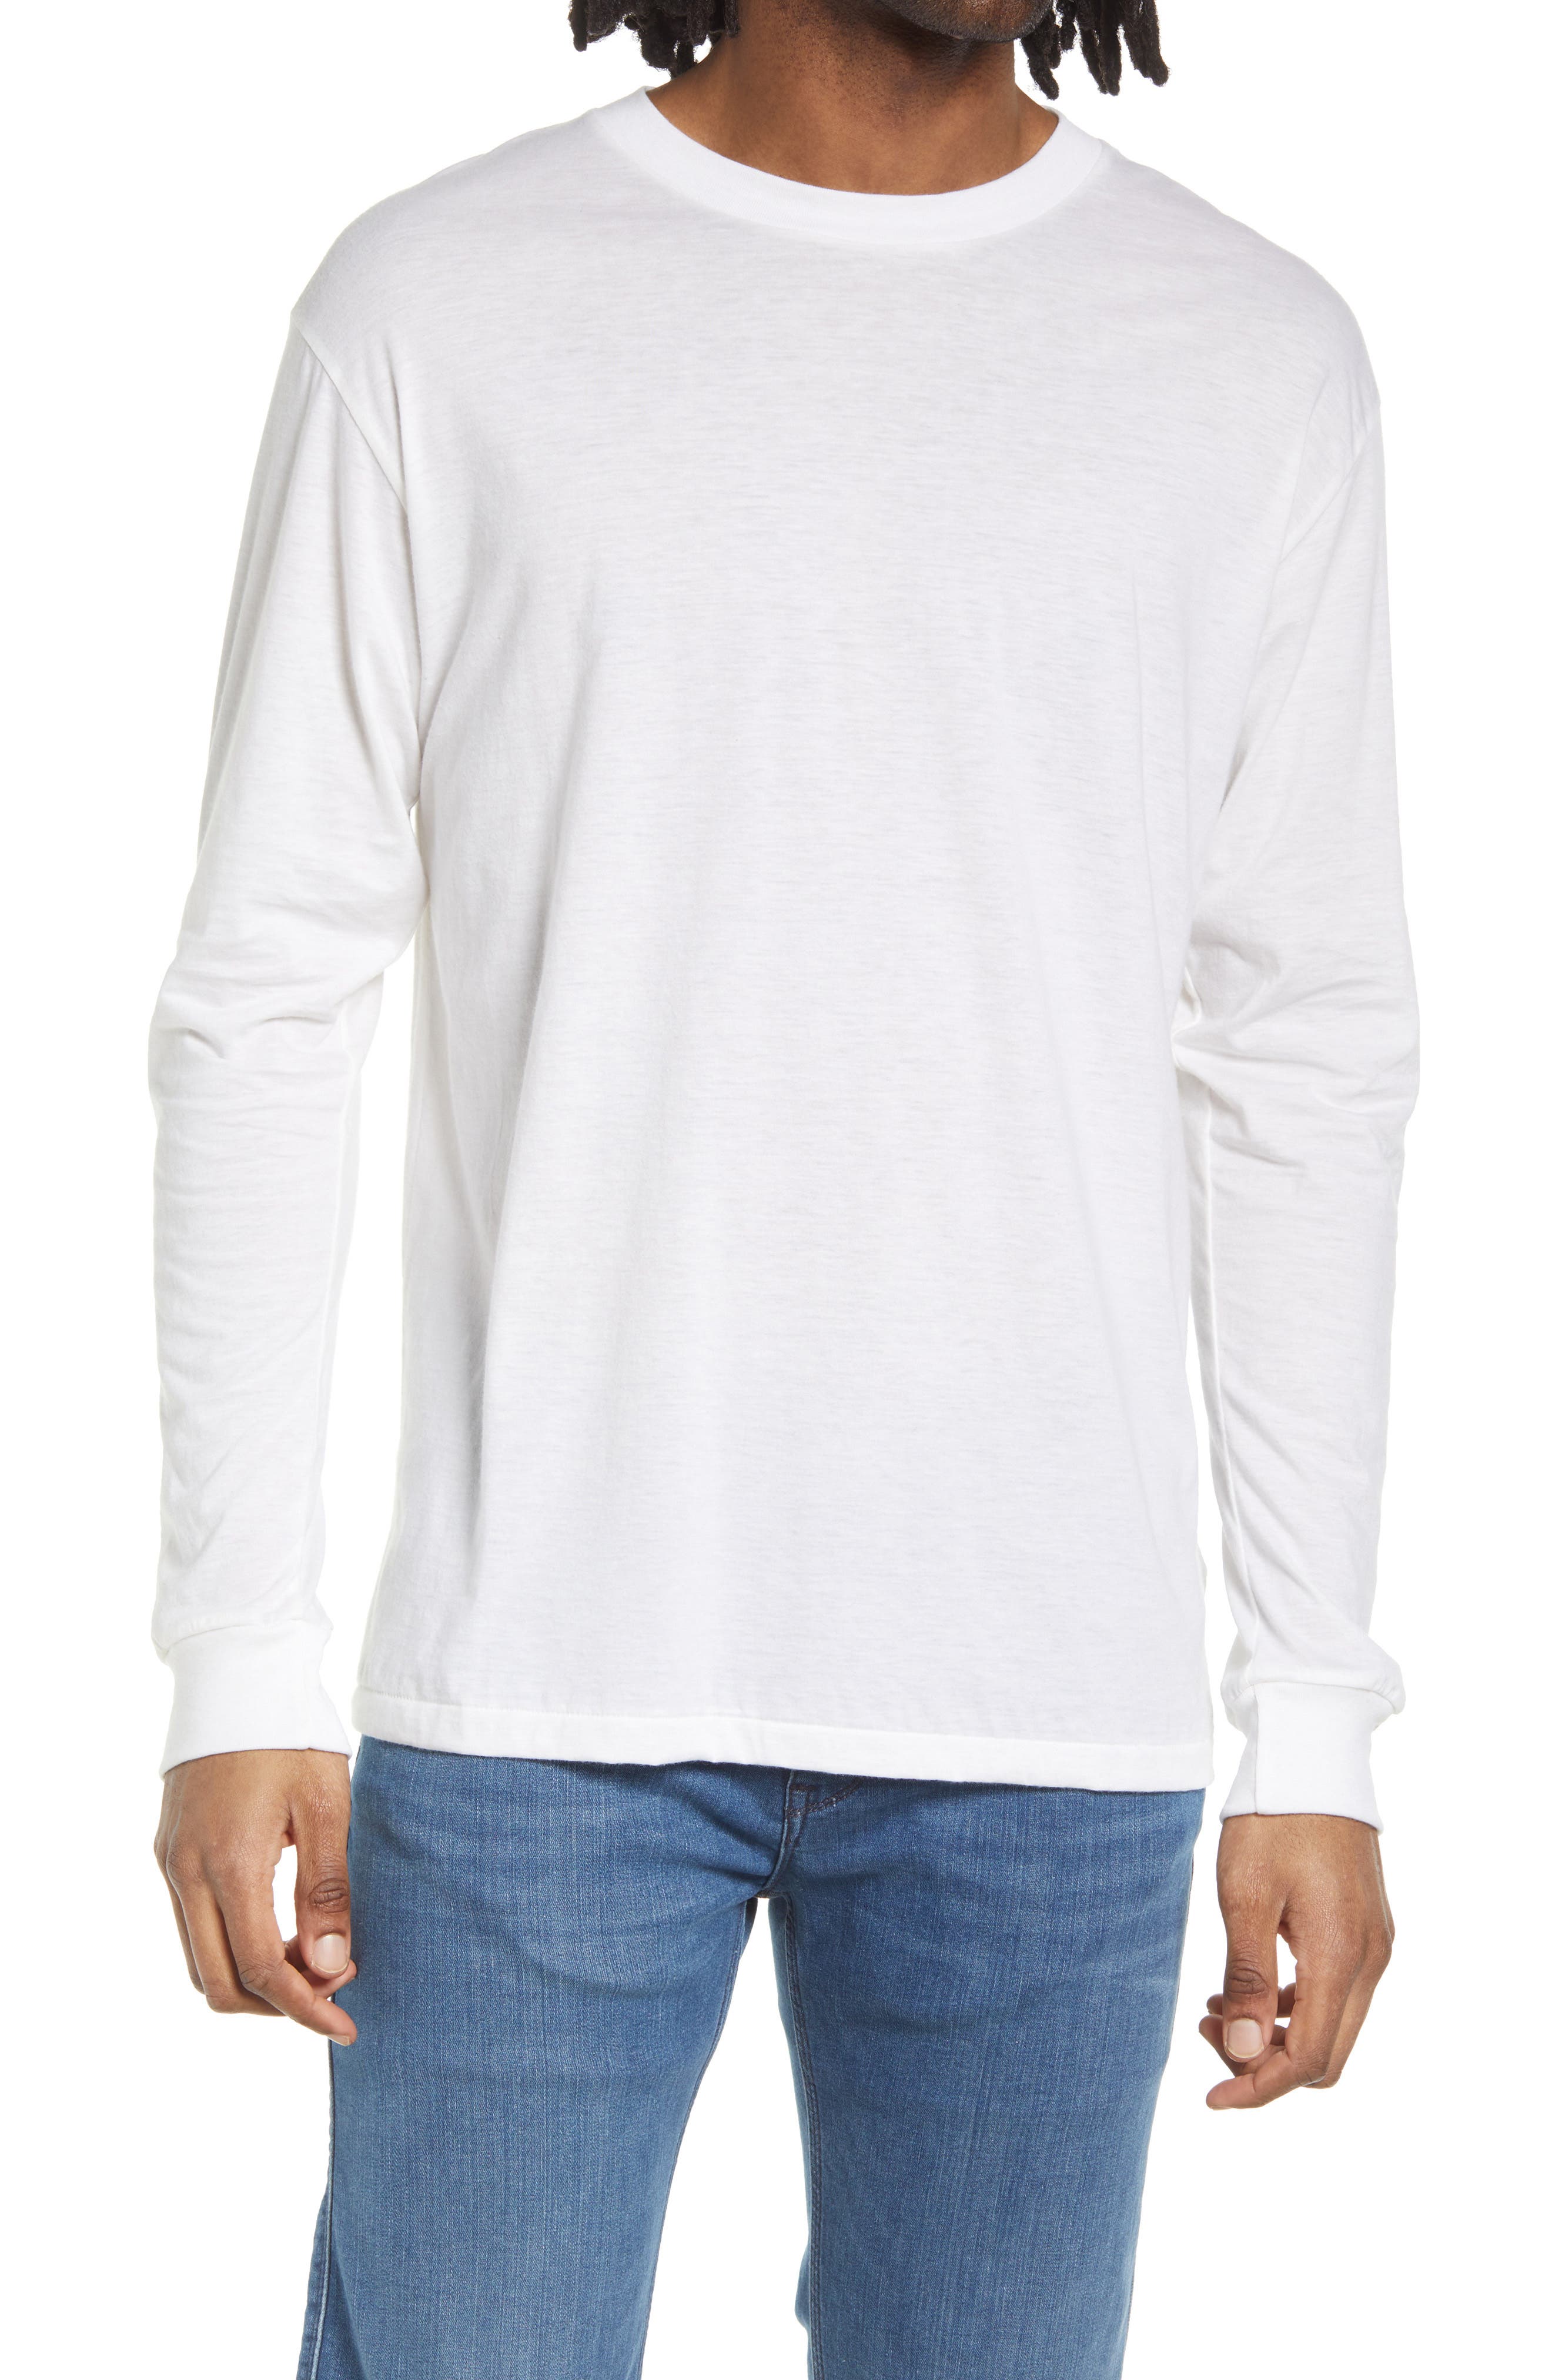 John Elliott Men's Long Sleeve Cotton & Cashmere T-Shirt in White at Nordstrom, Size Small